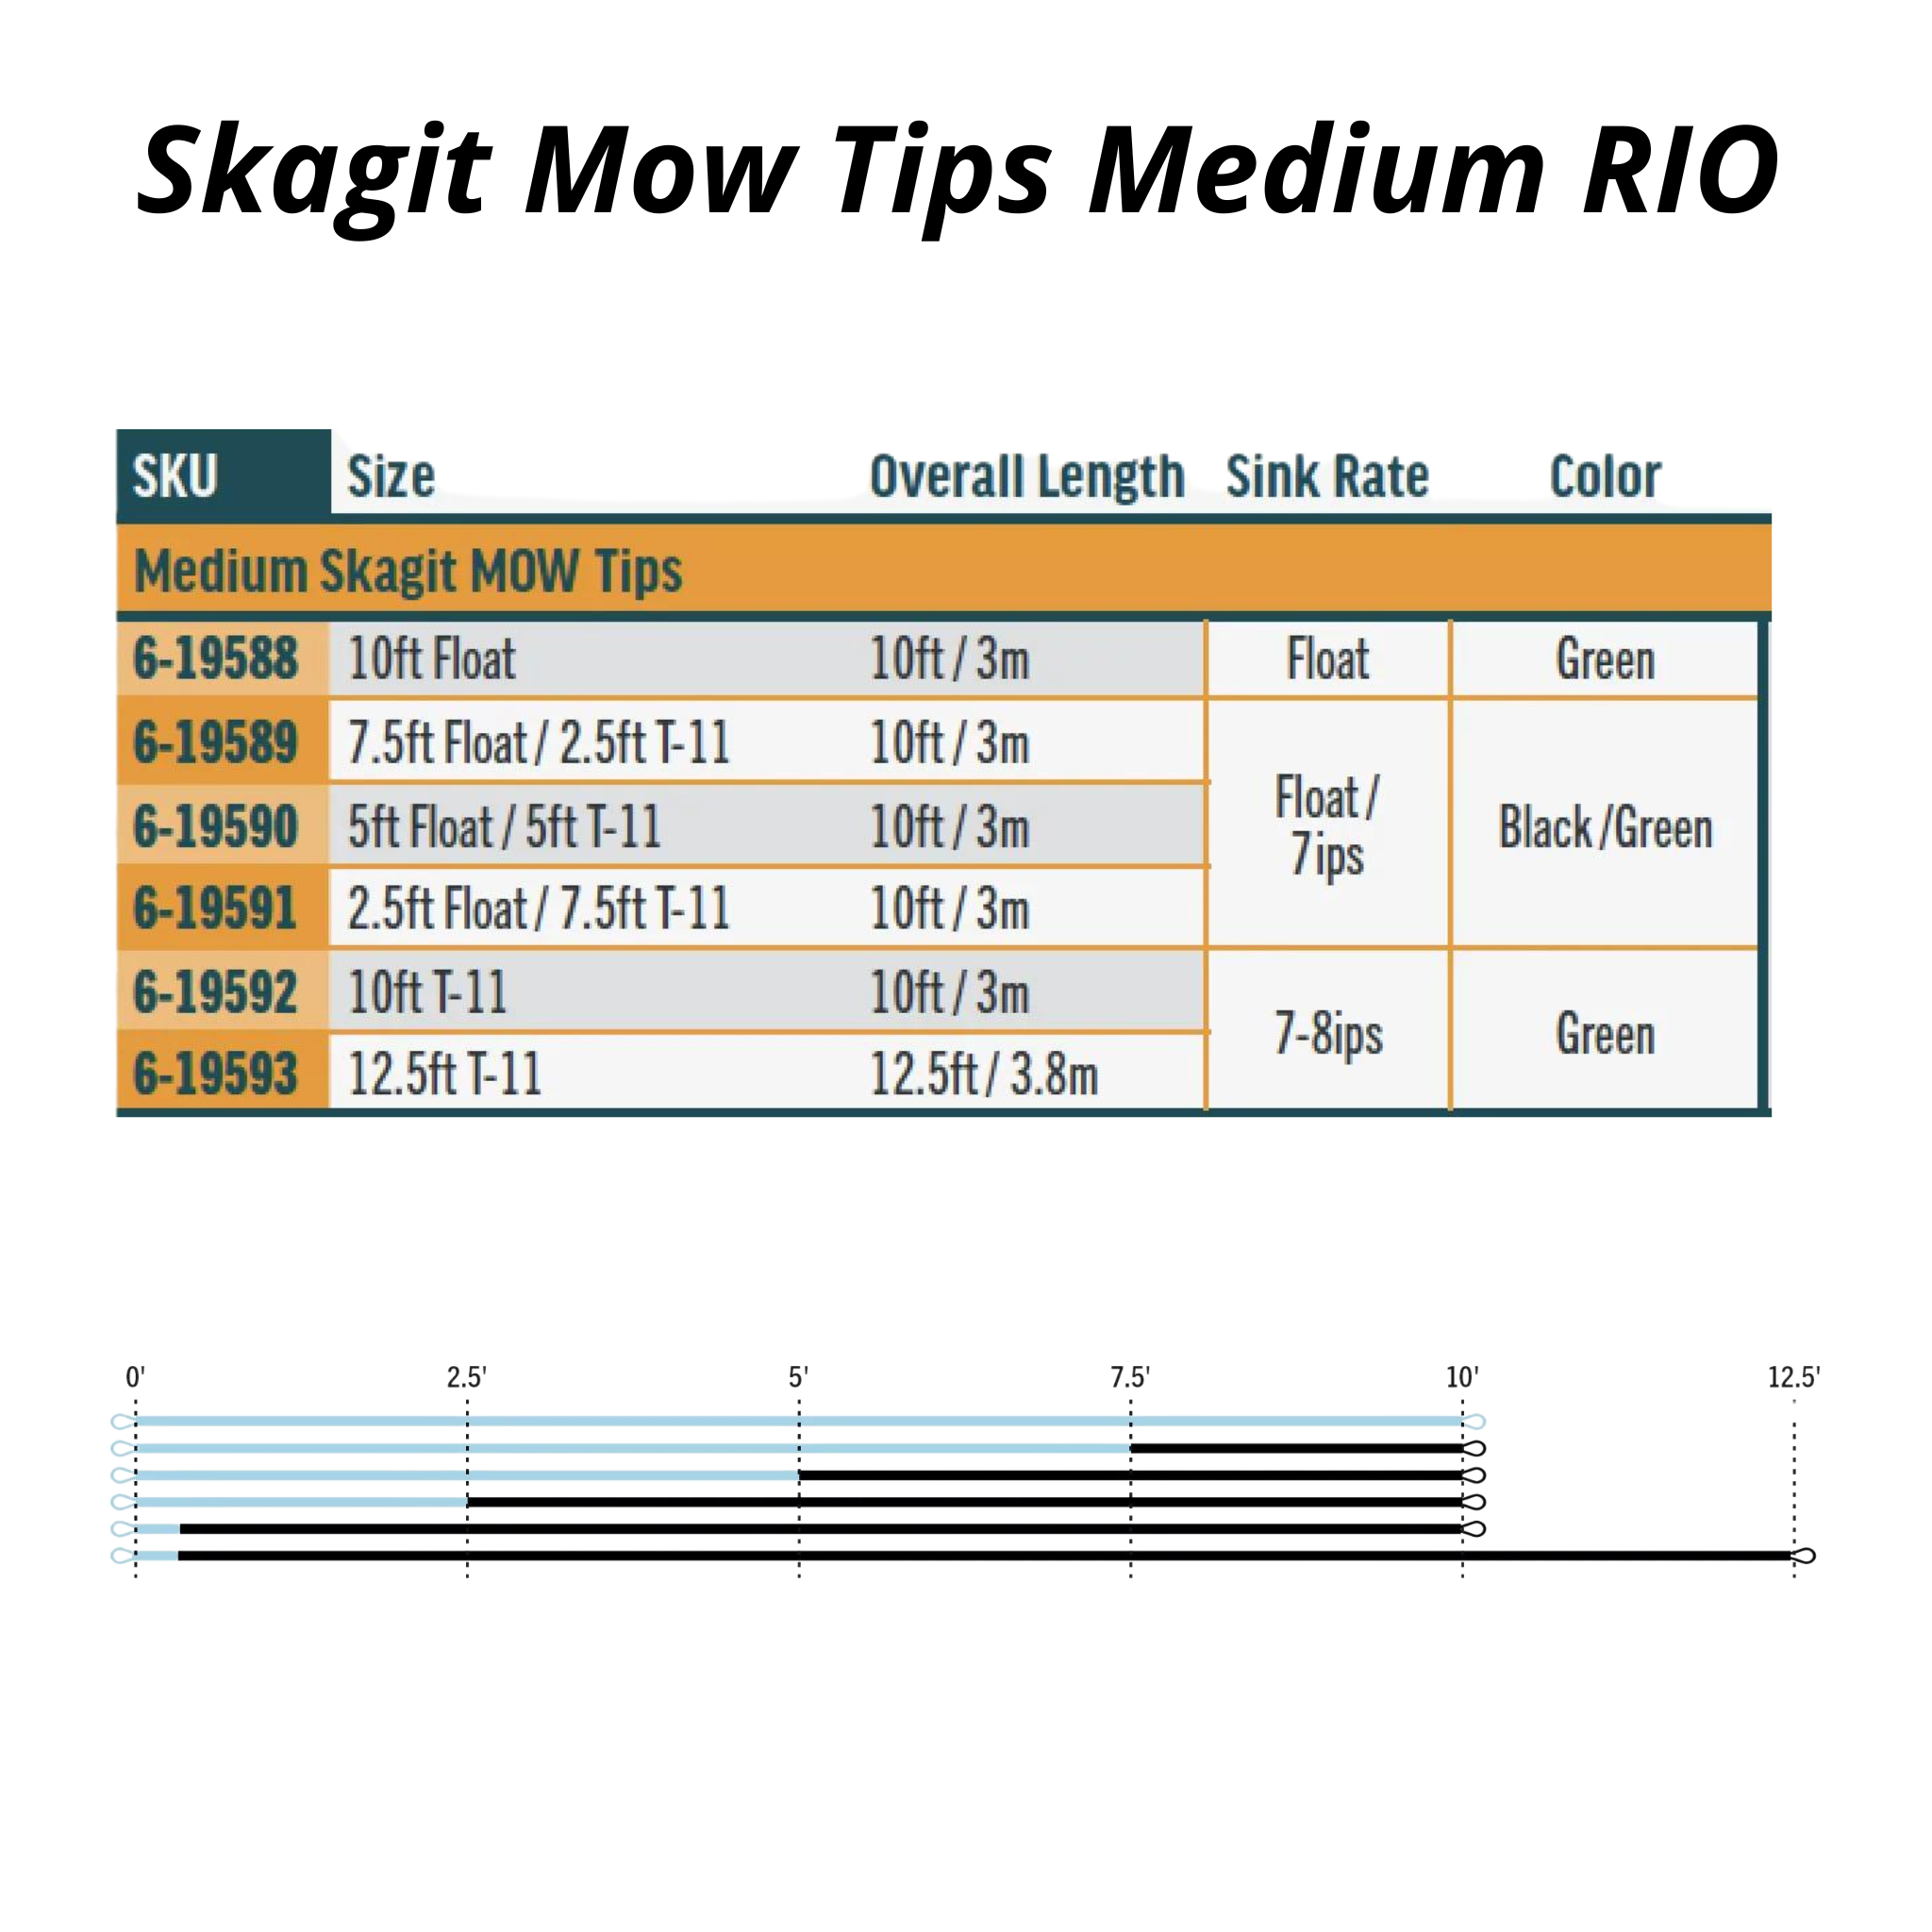 Skagit mow tips medium rio